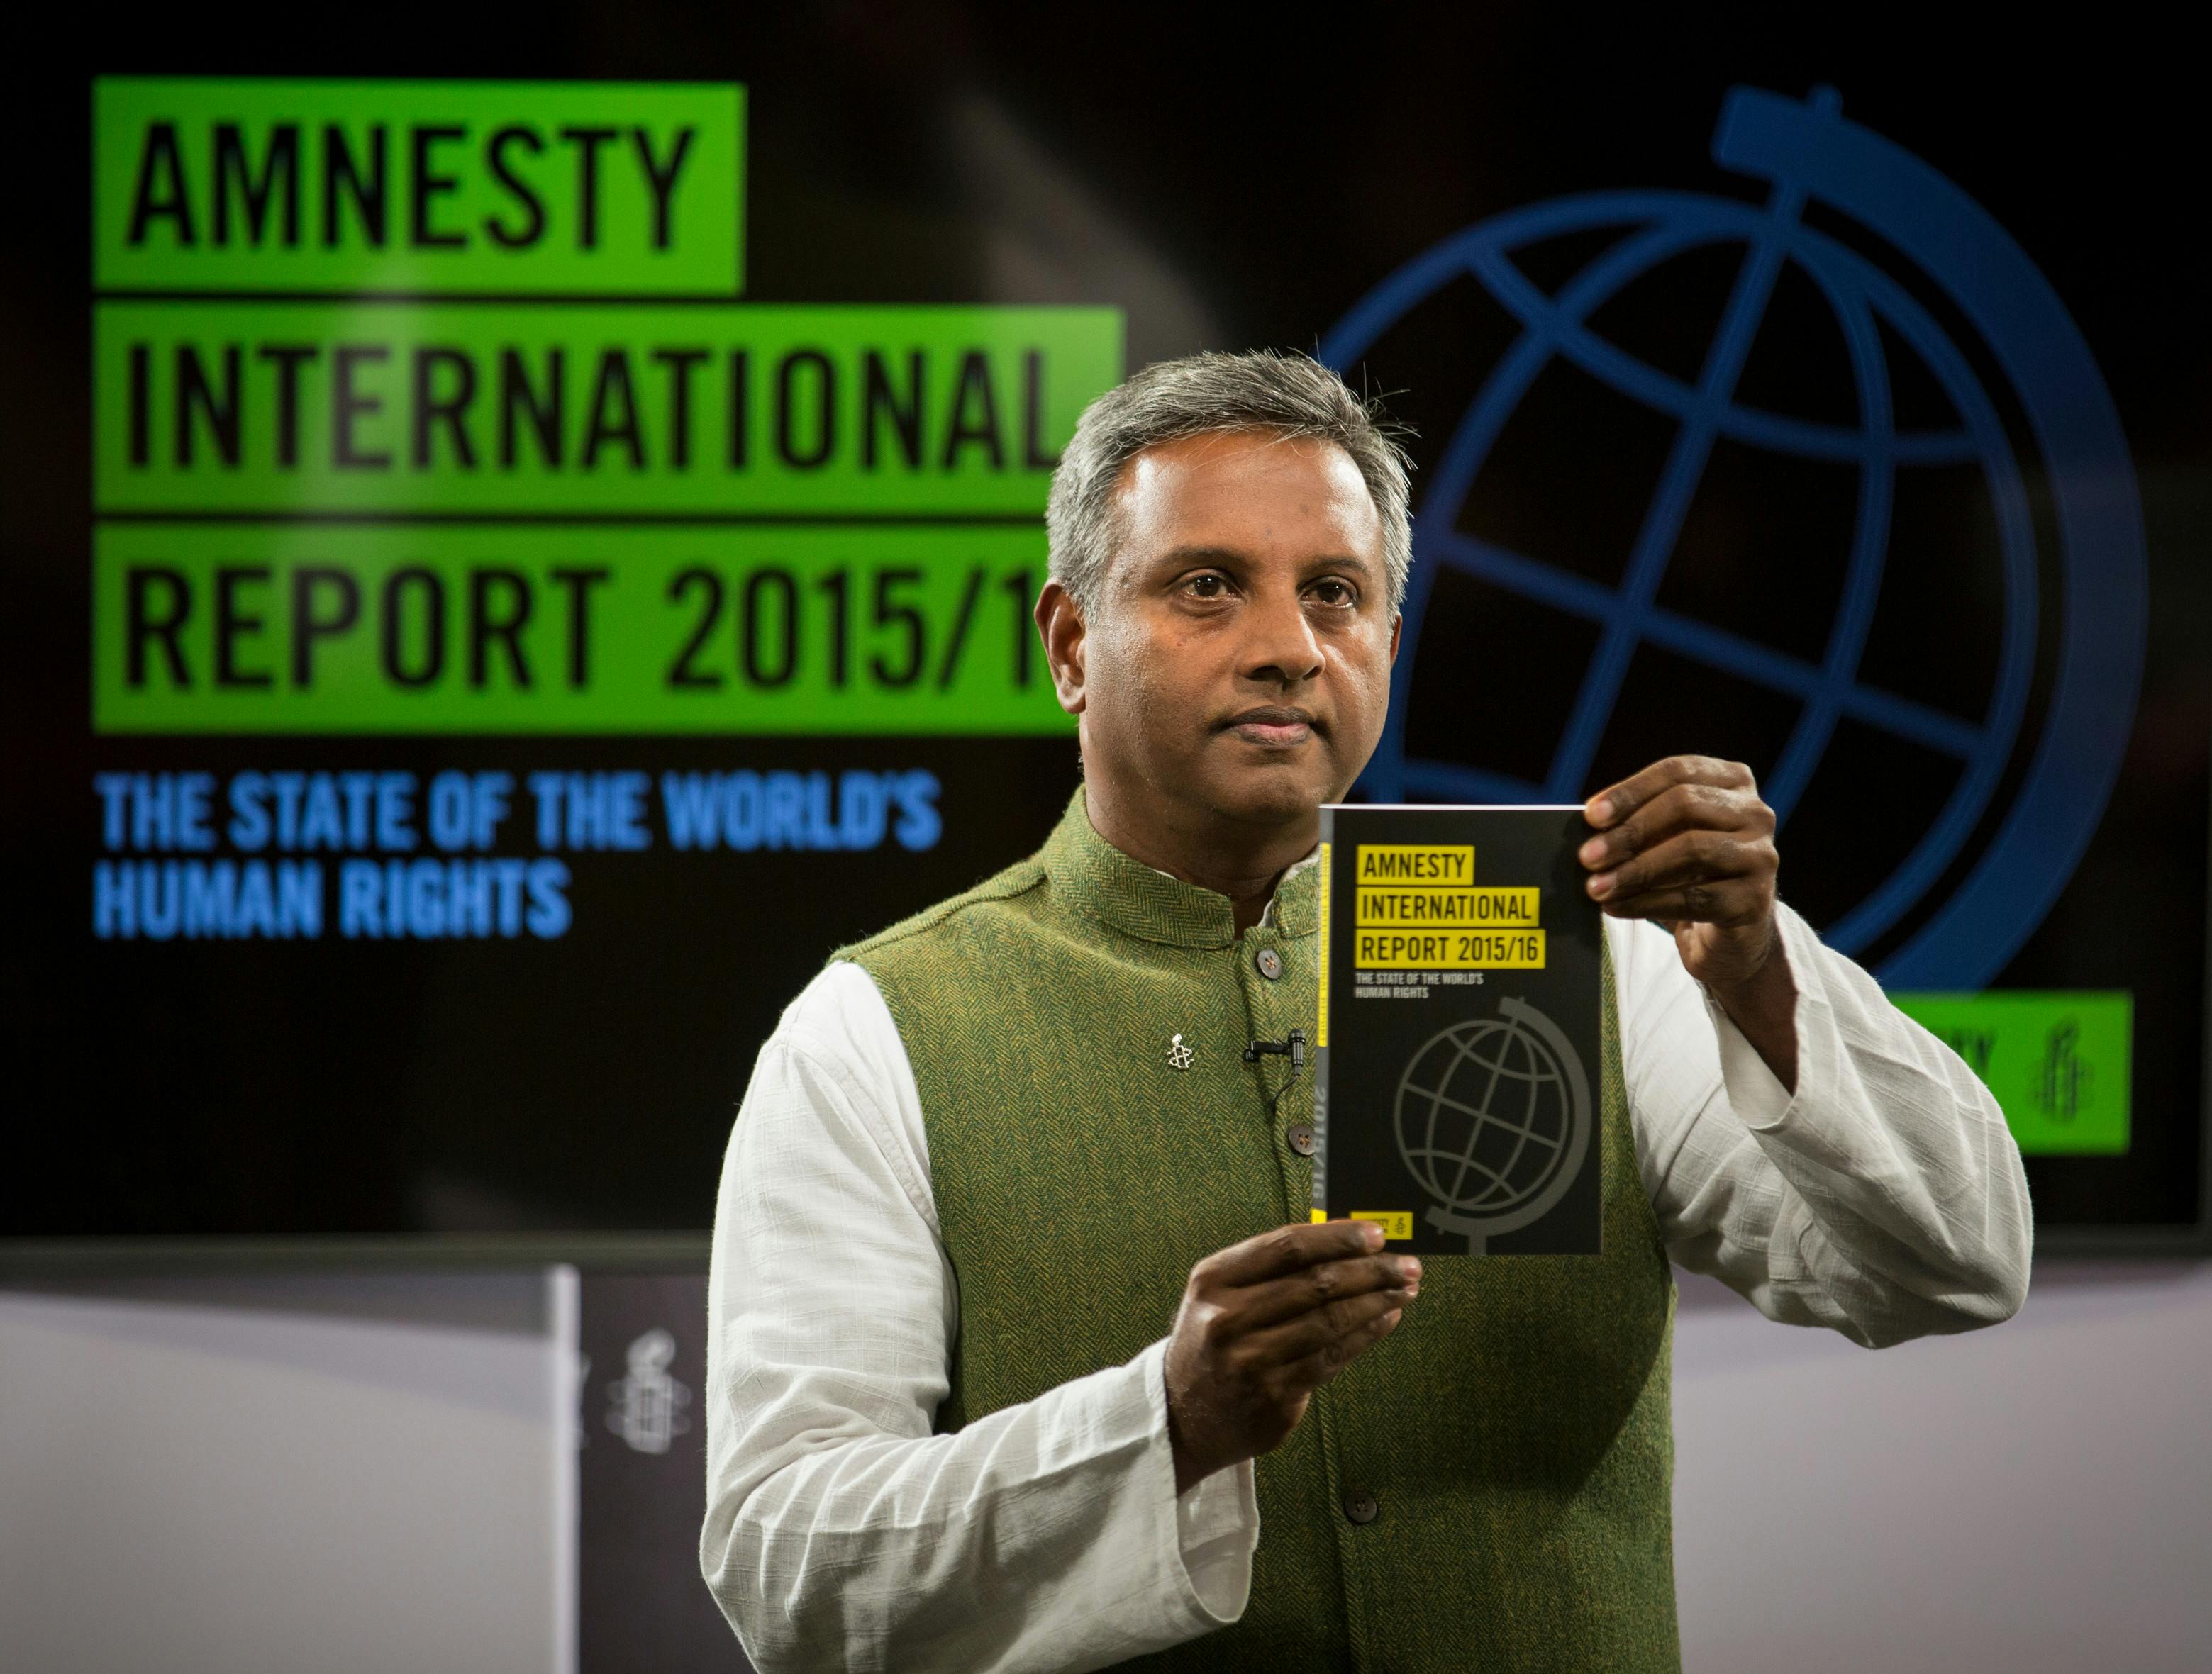 Salil Shetty présente le rapport annuel d'Amnesty International 2015/2016